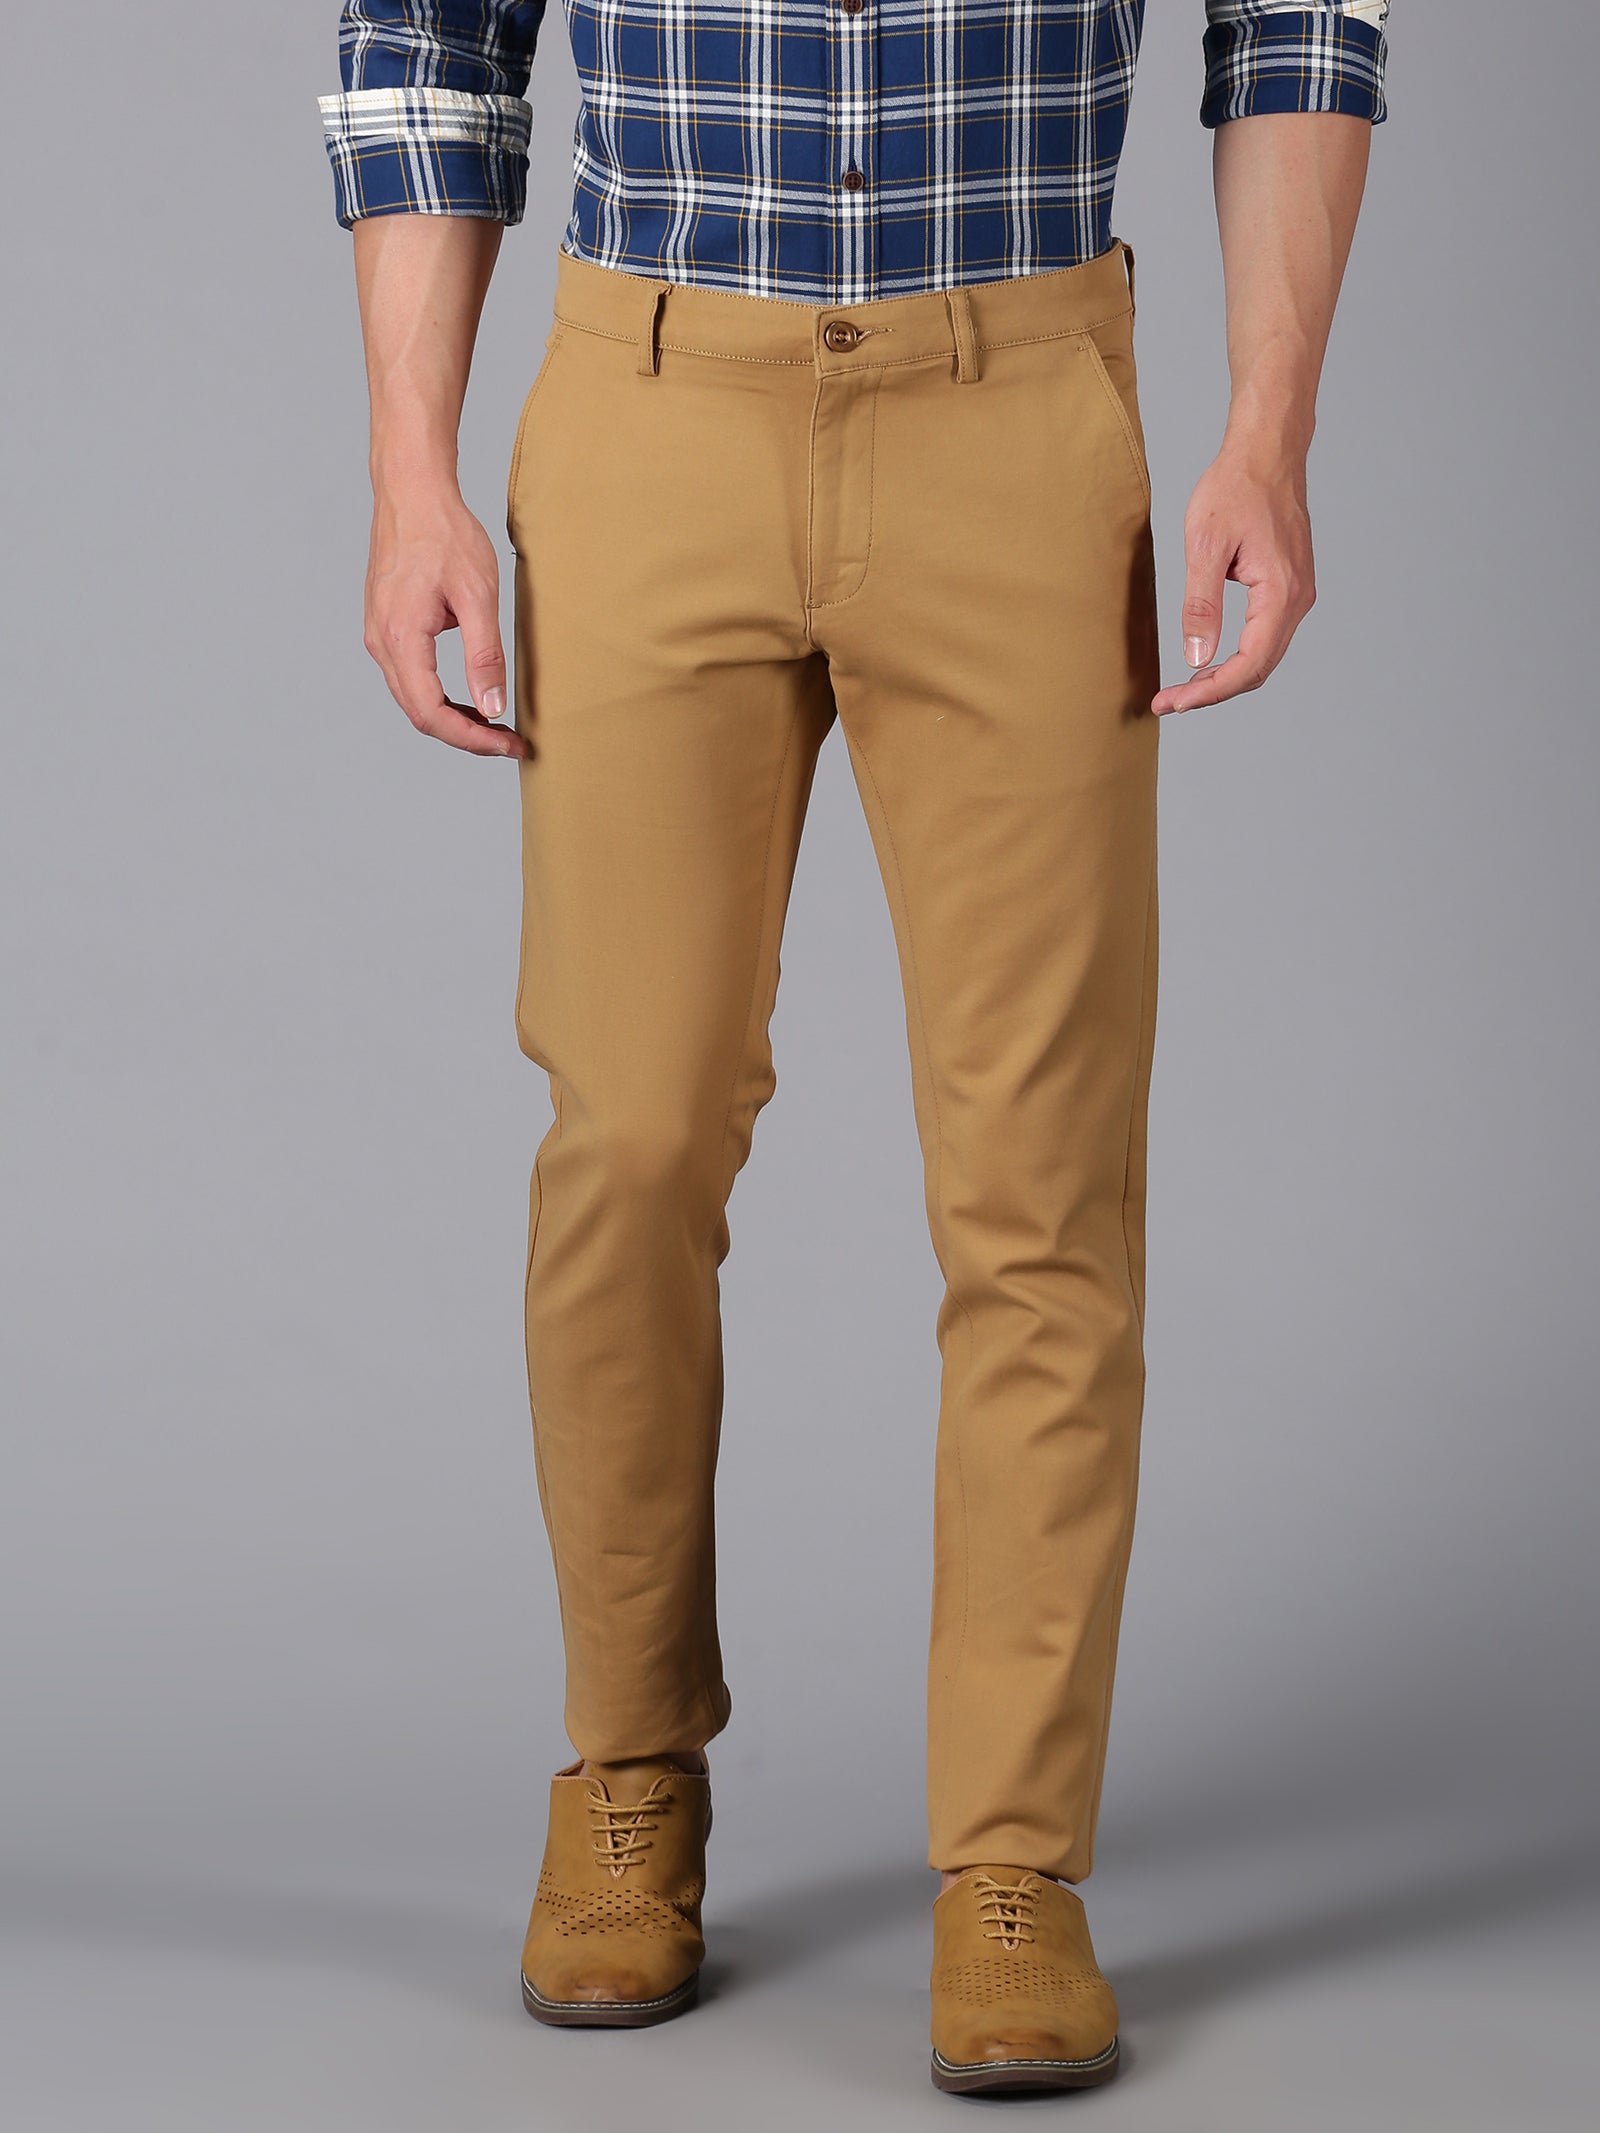 Buy Men Brown Slim Fit Solid Casual Trousers Online  794177  Allen Solly